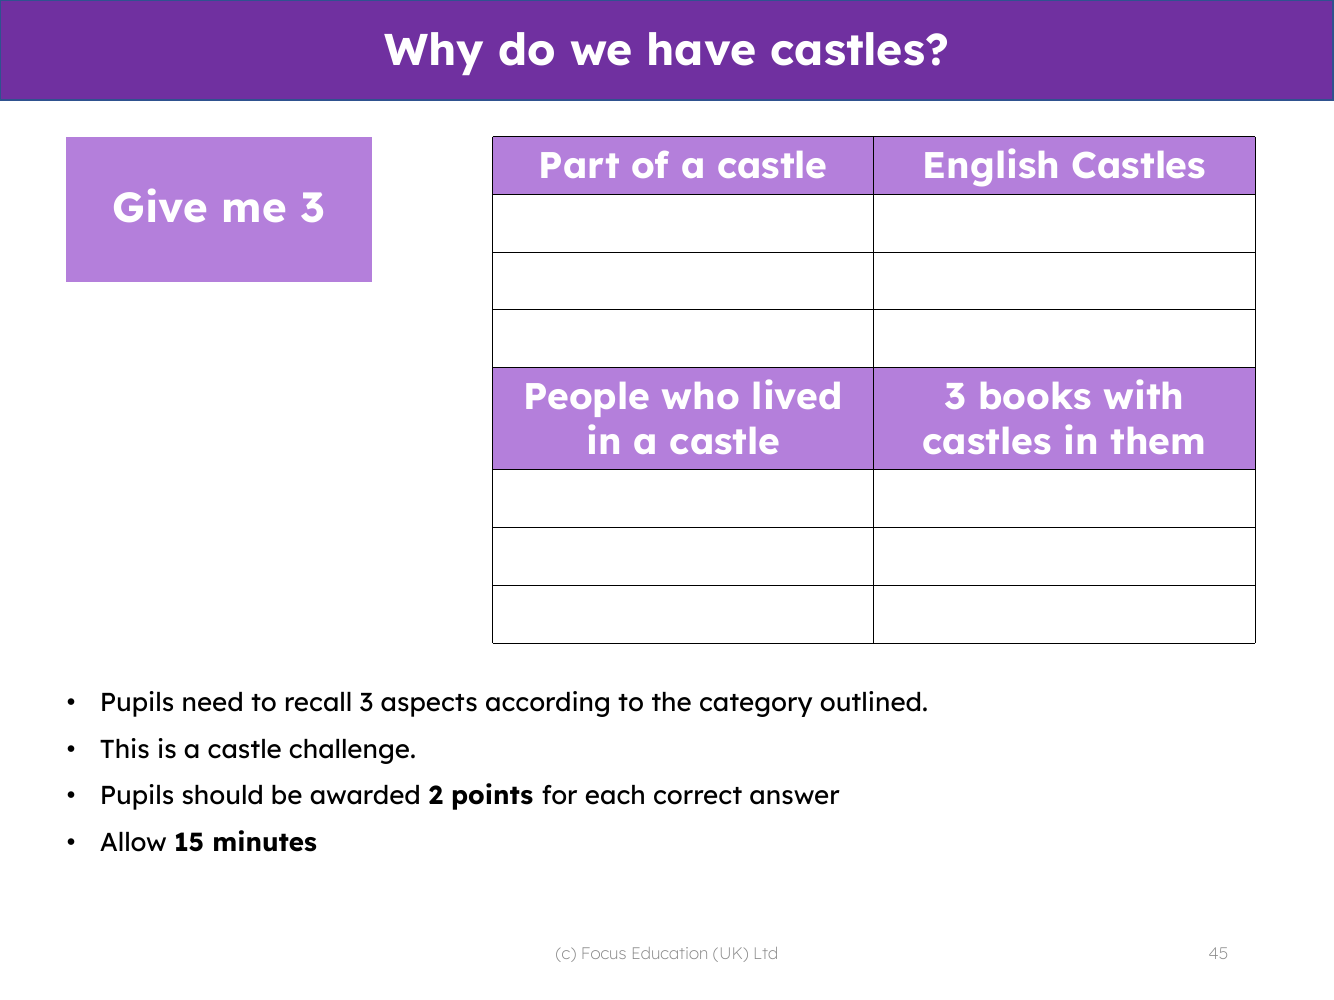 Give me 3 - Castles